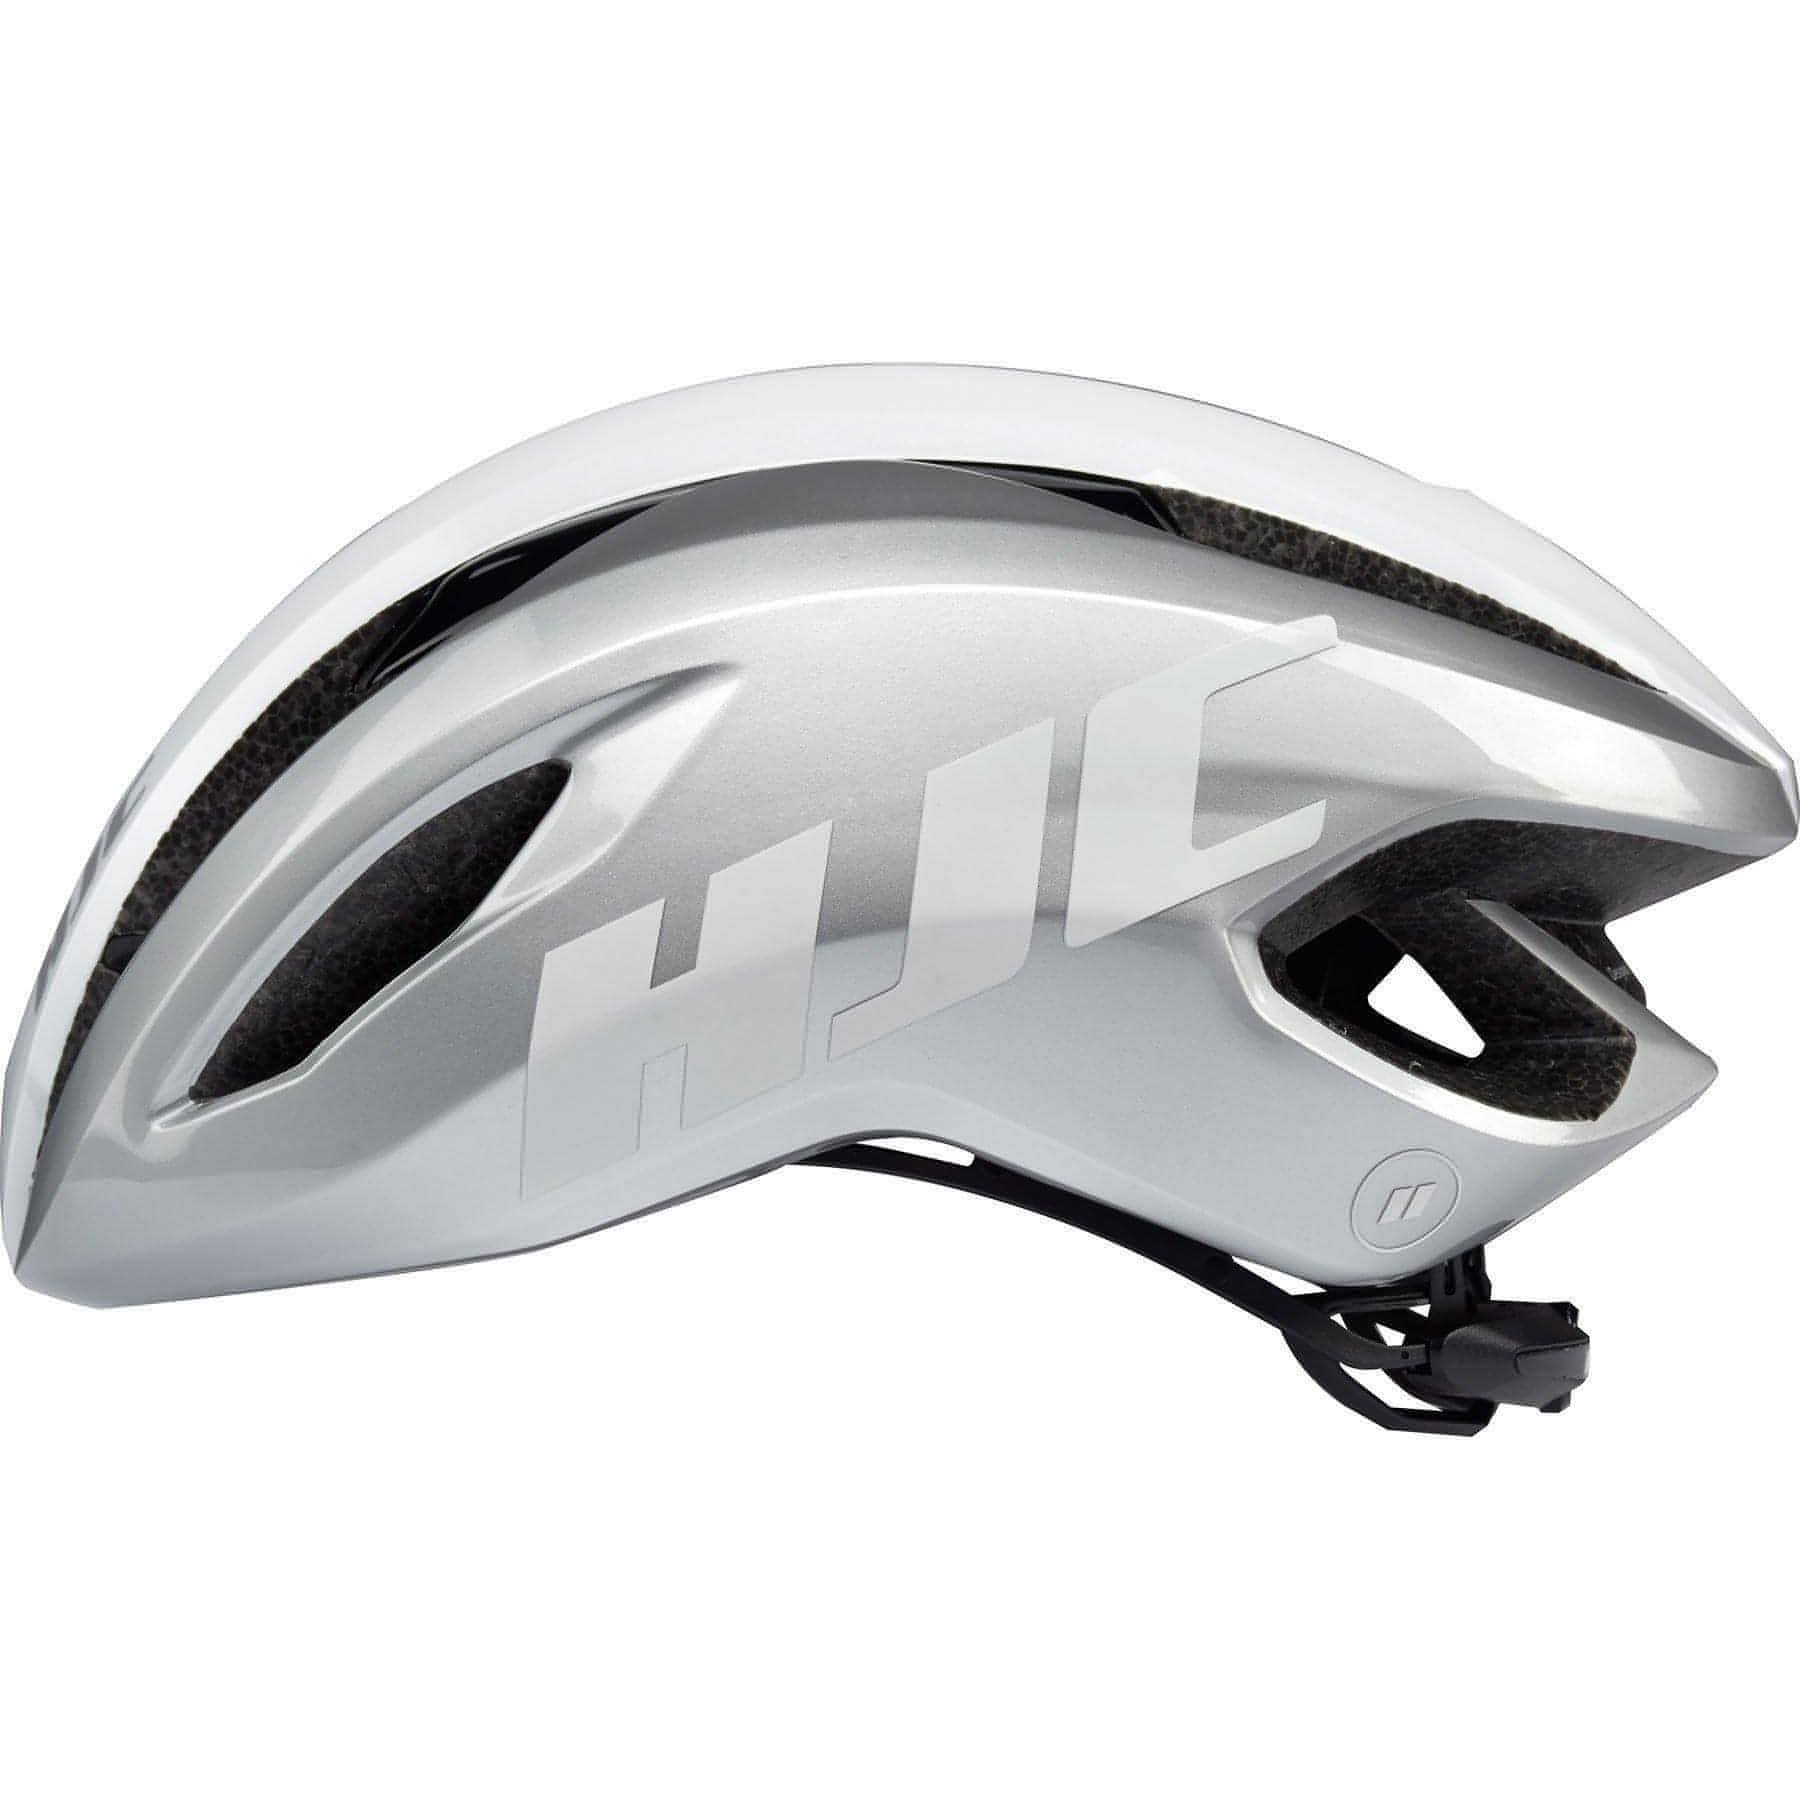 HJC Valeco Road Cycling Helmet - Silver - Start Fitness